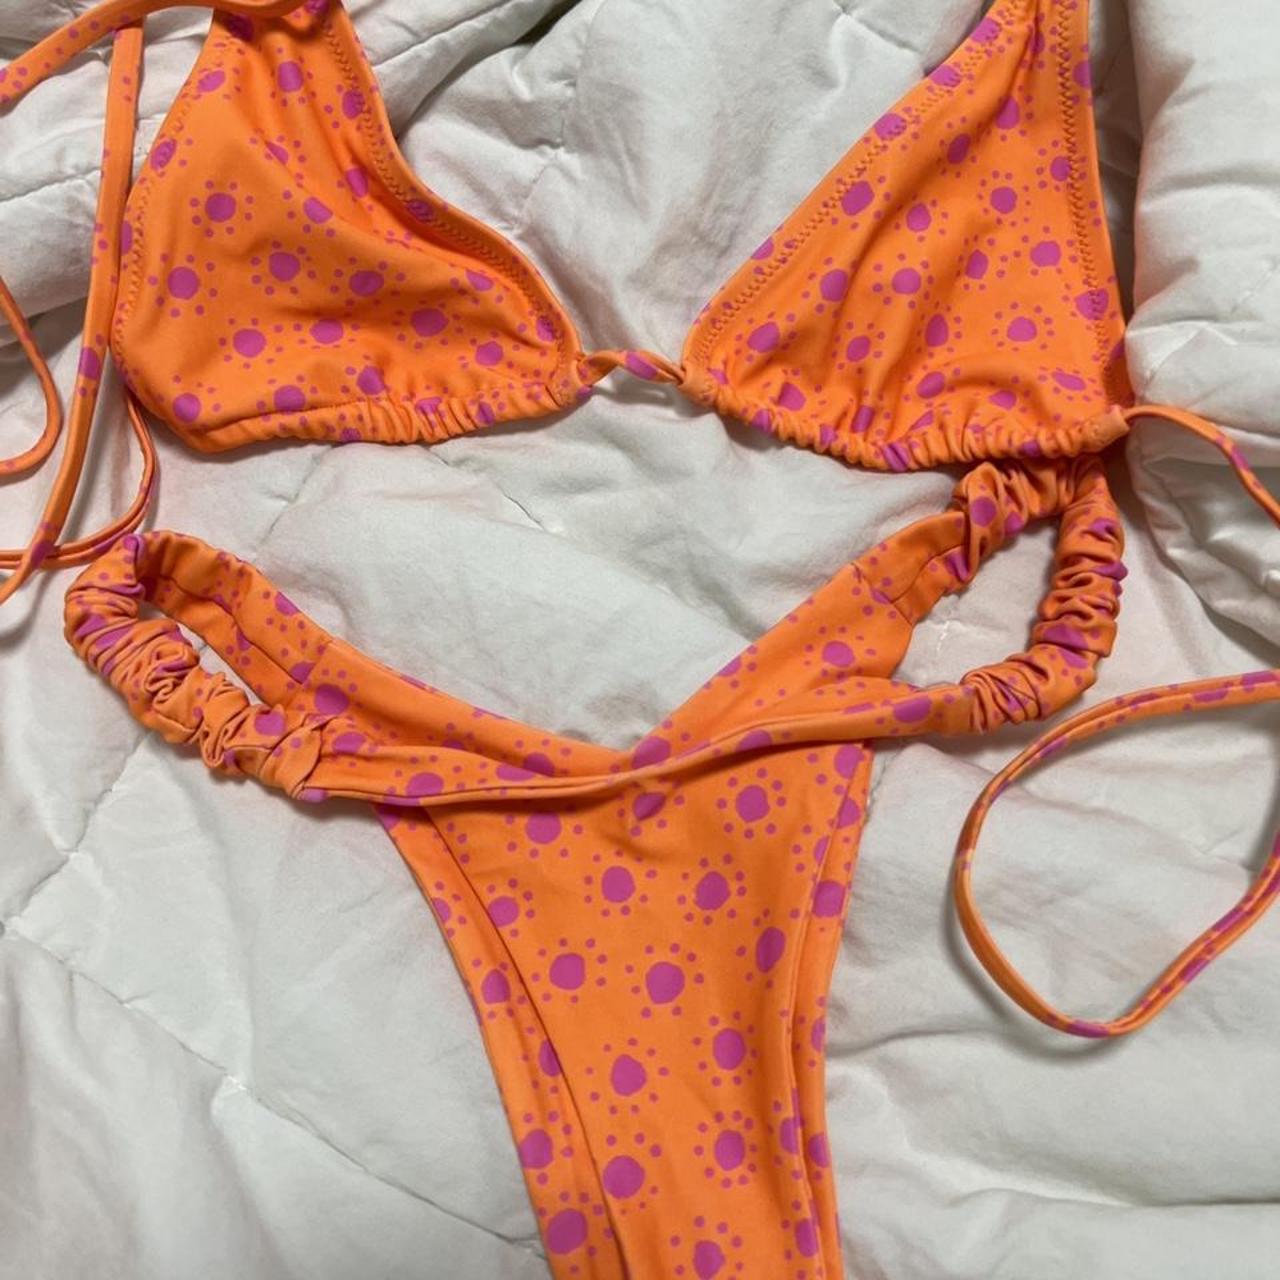 Women's Orange and Pink Bikinis-and-tankini-sets